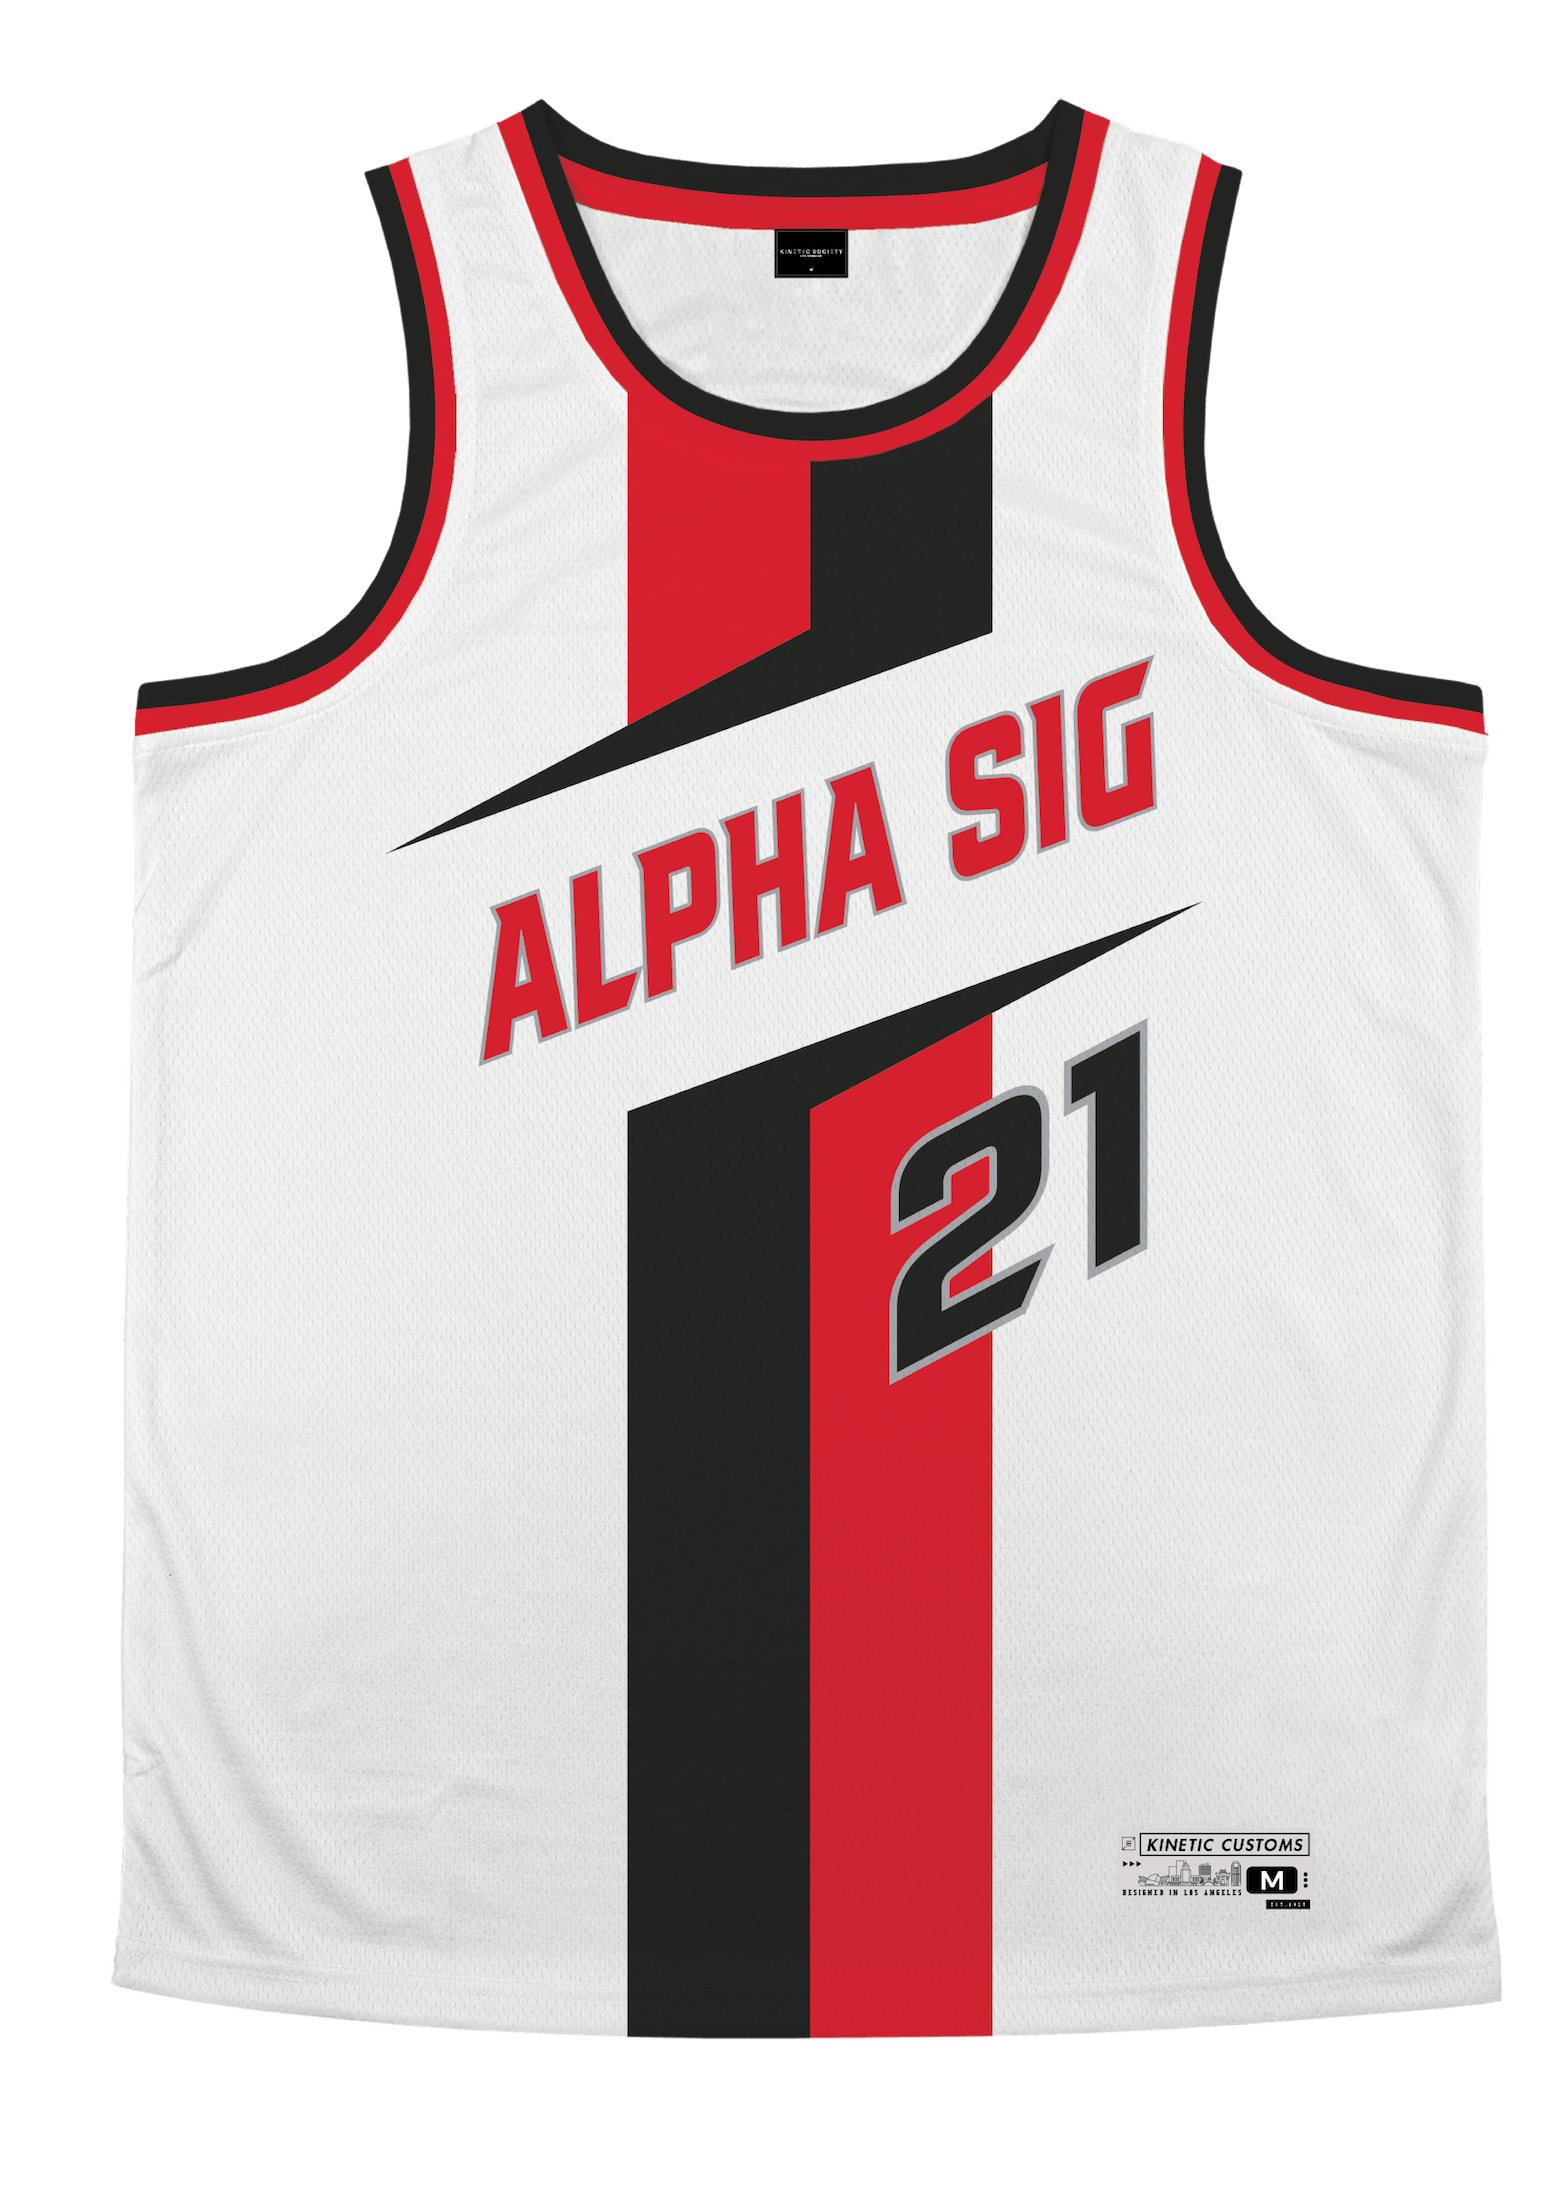 ALPHA SIGMA PHI - Middle Child Basketball Jersey Premium Basketball Kinetic Society LLC 